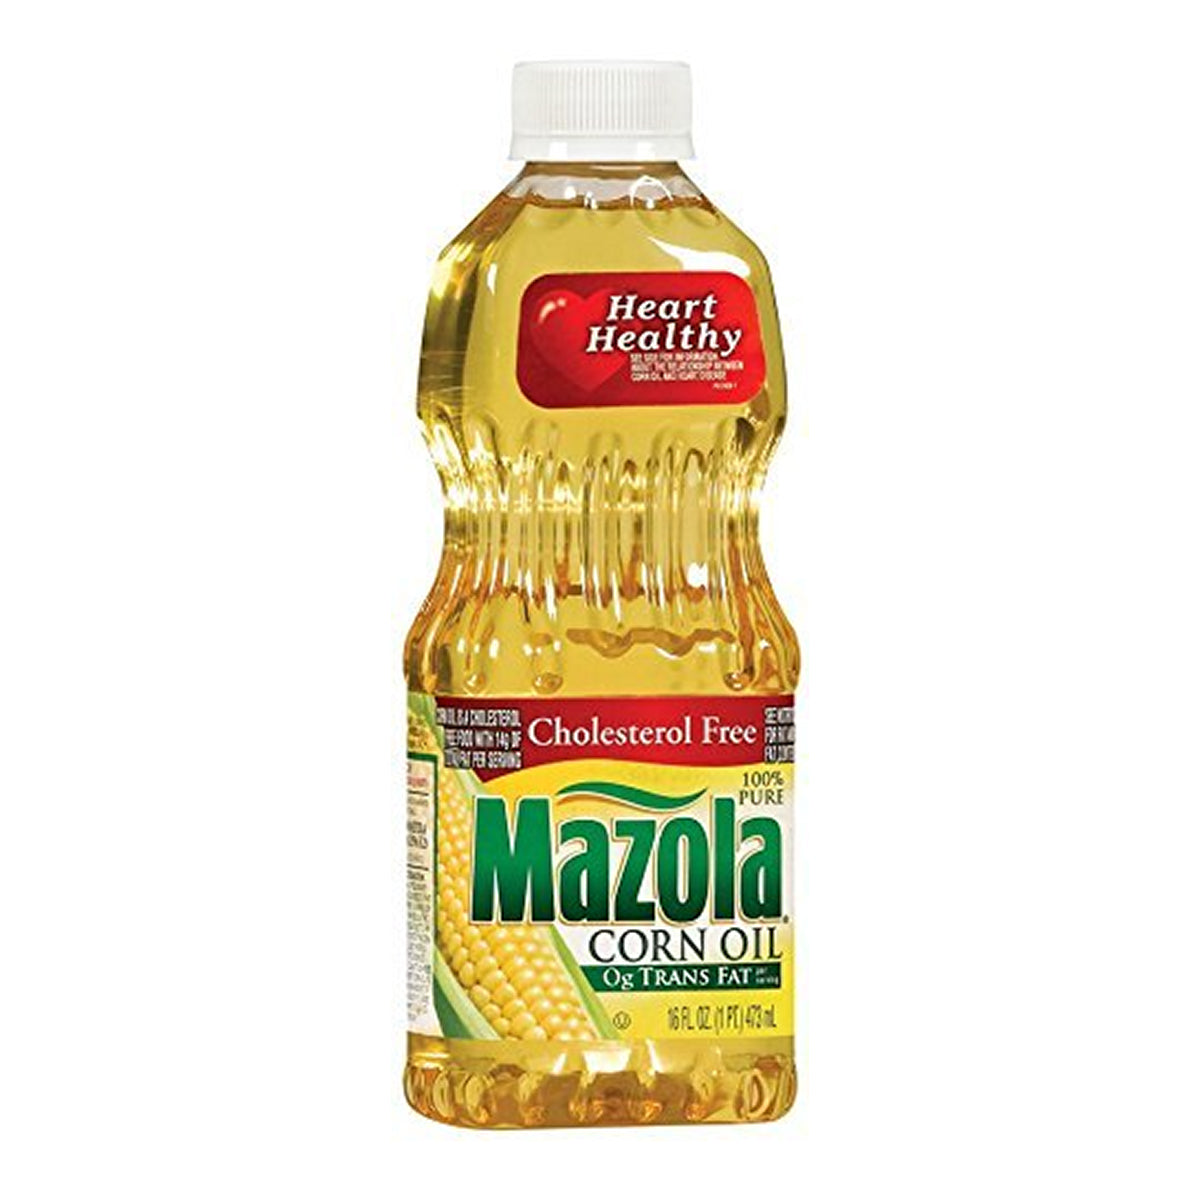 mazola corn oil - 16oz